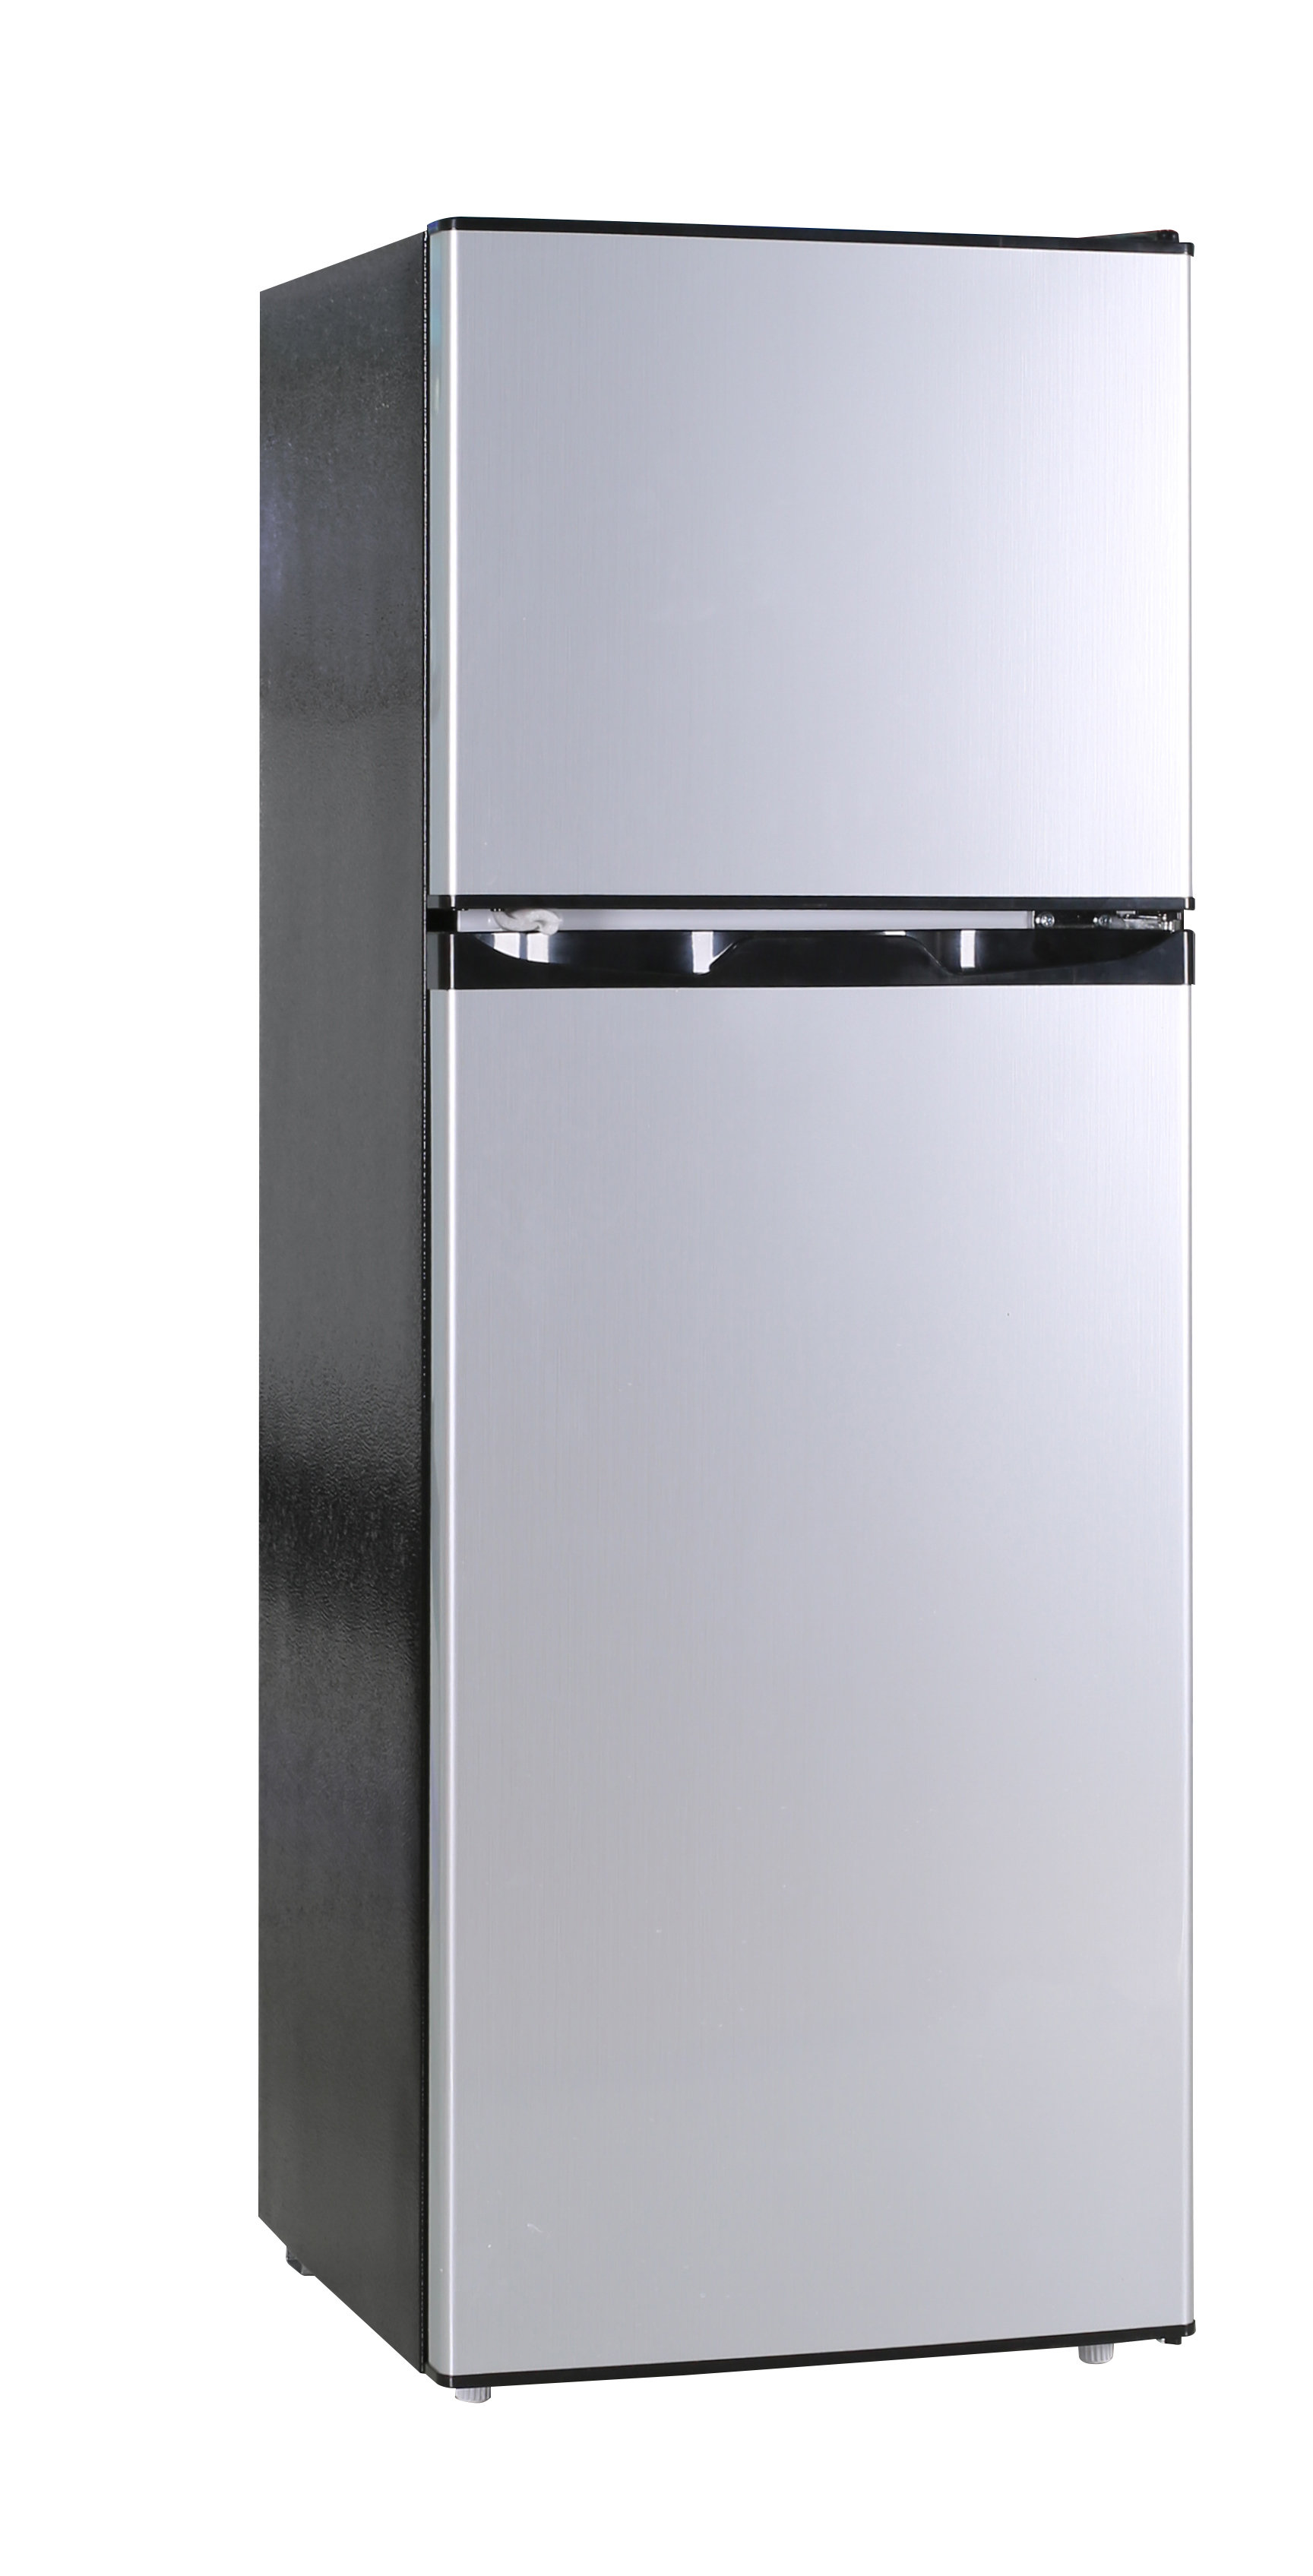 Frestec 7.4 CU' Refrigerator with Freezer, 2 Door Fridge with